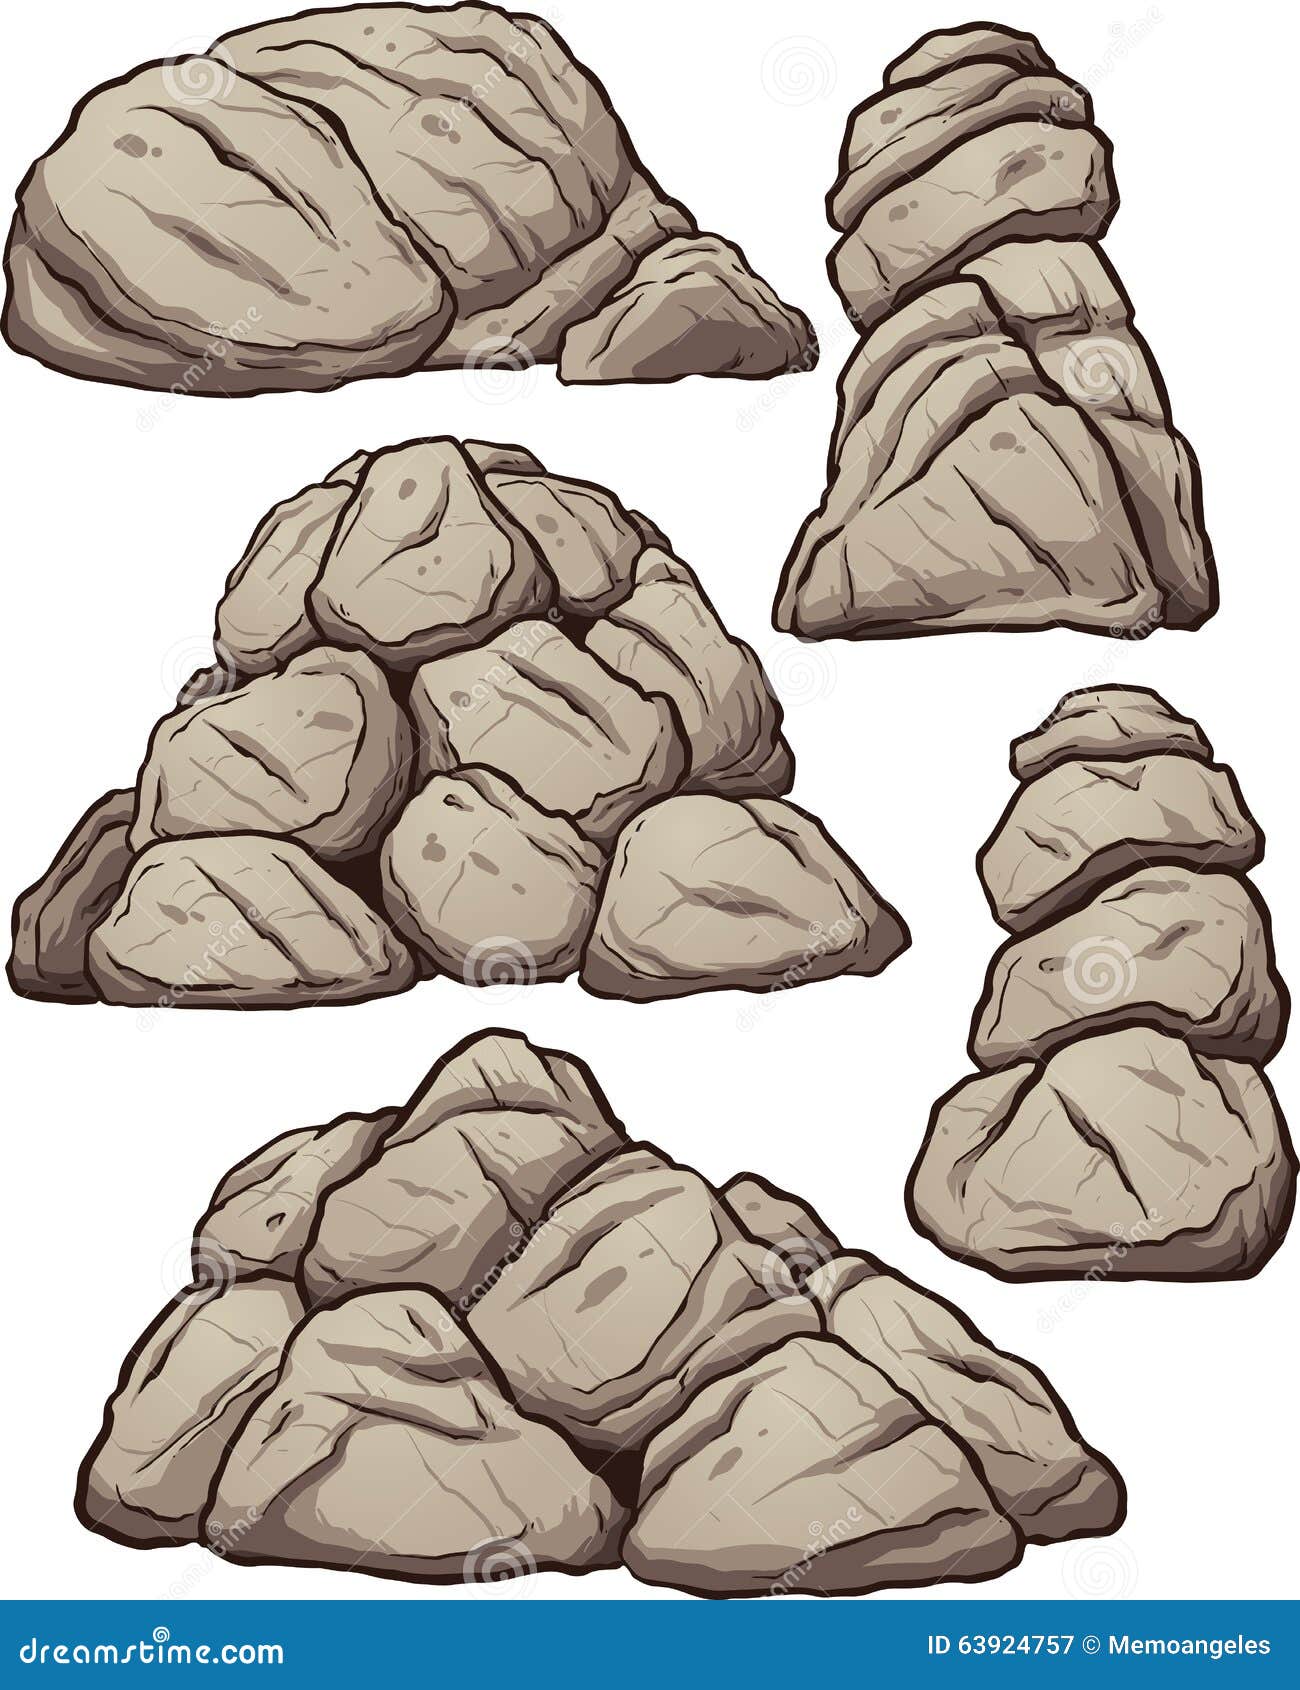 piles of rocks